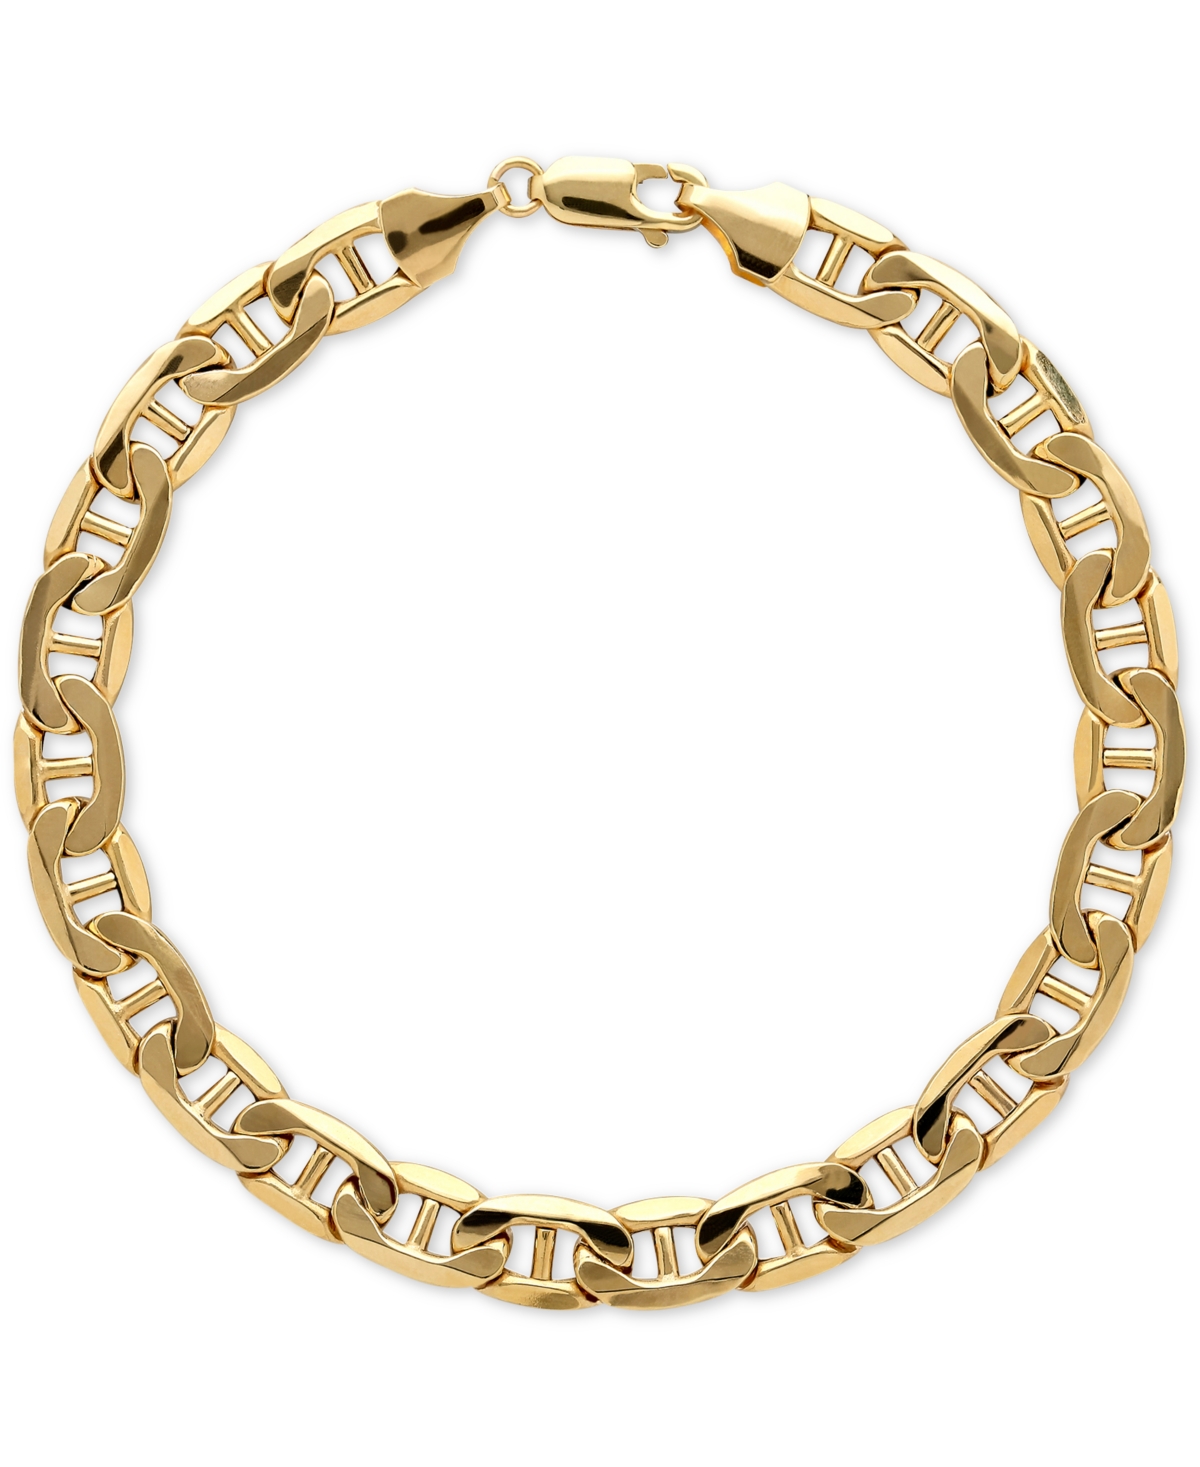 Men's Beveled Marine Link Bracelet in 10k Gold - Yellow Gold